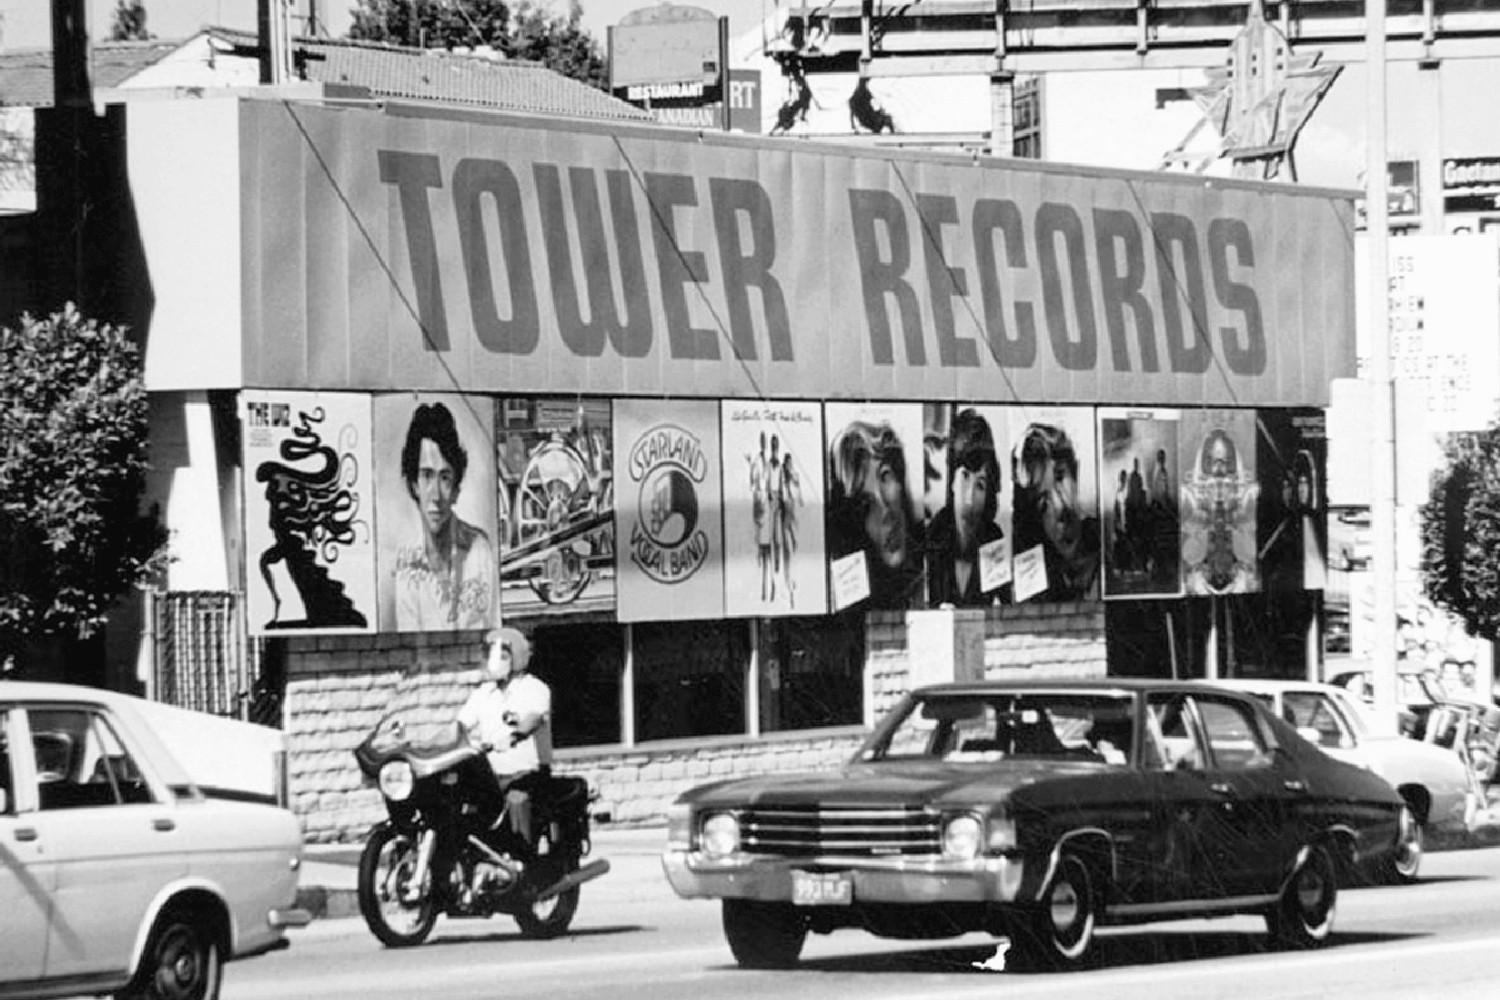 TowerRecords LosAngeles 1976 1500